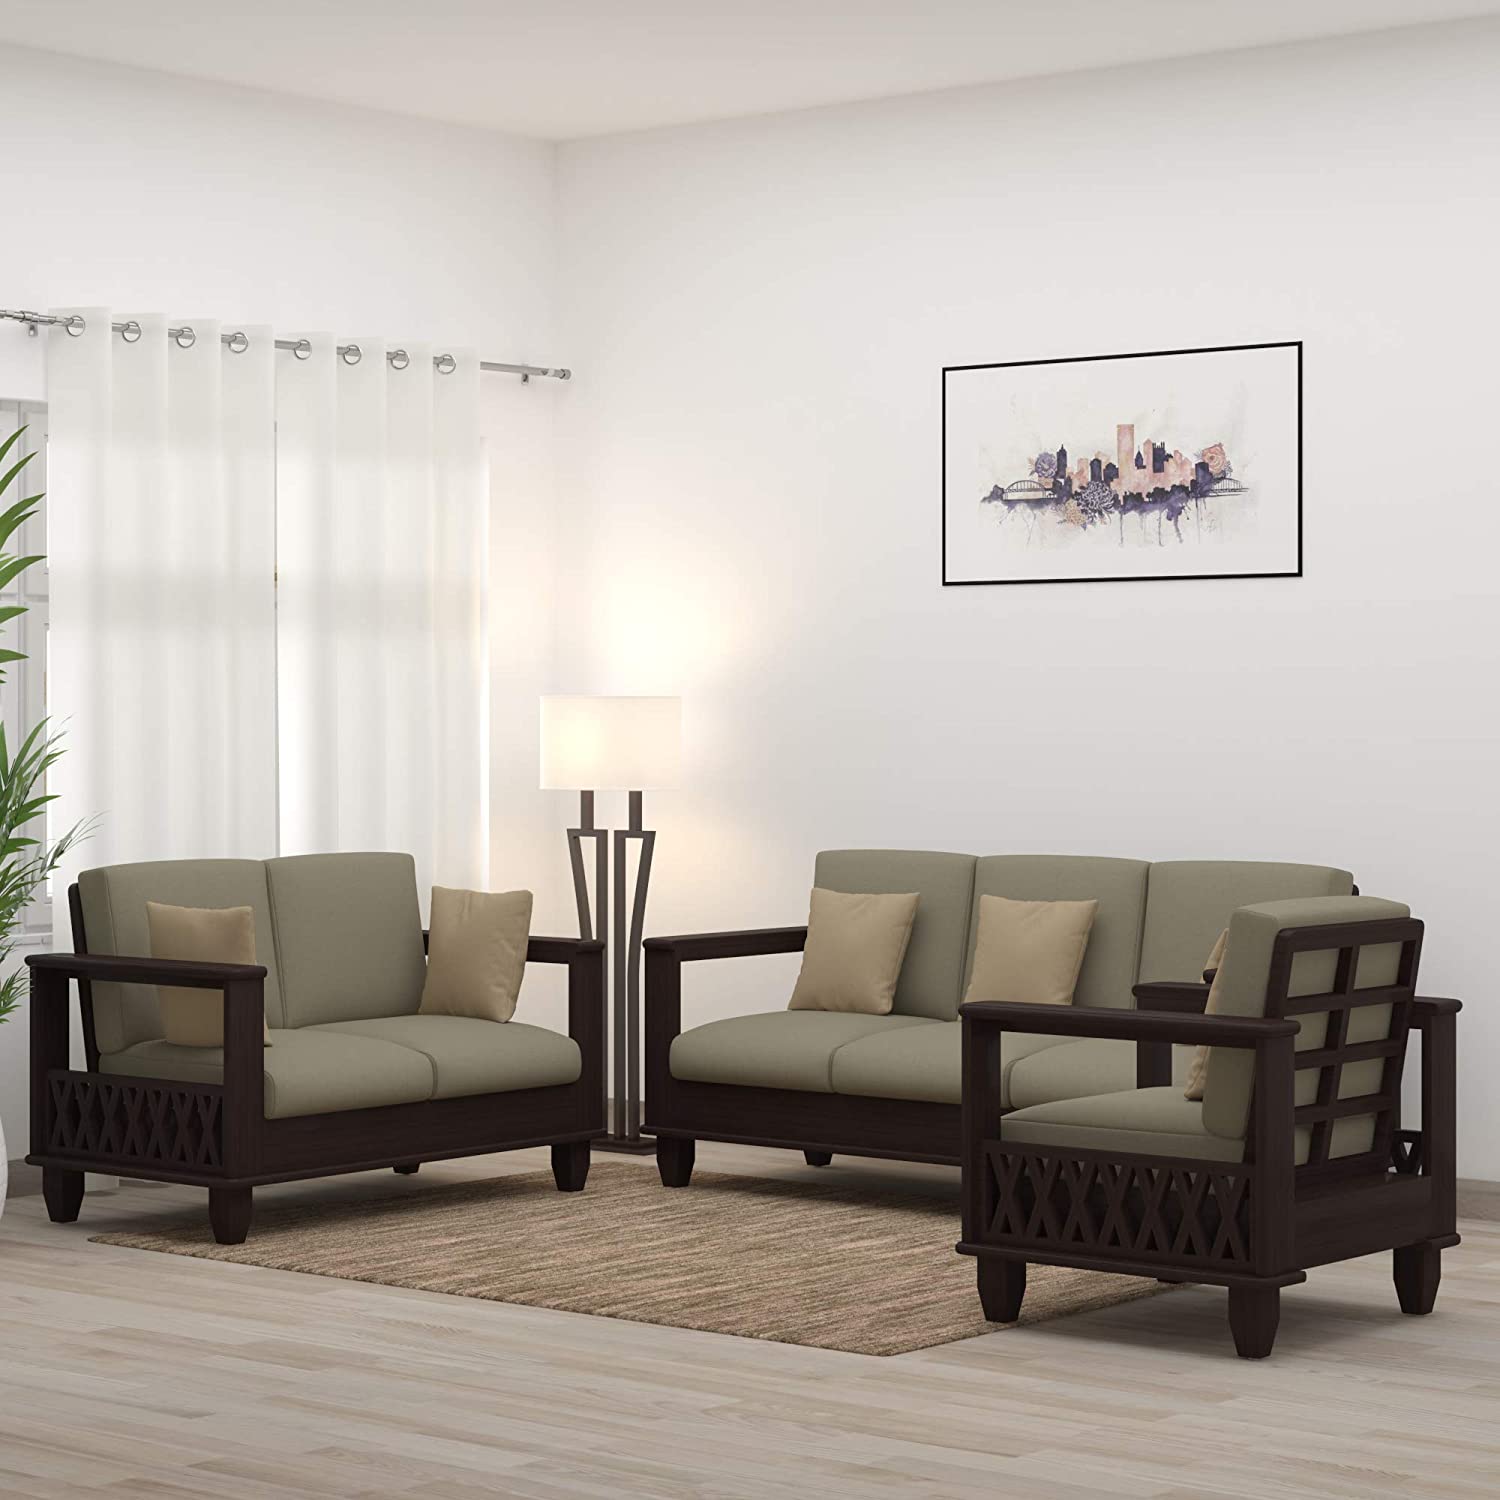 Buy sofa set online in India